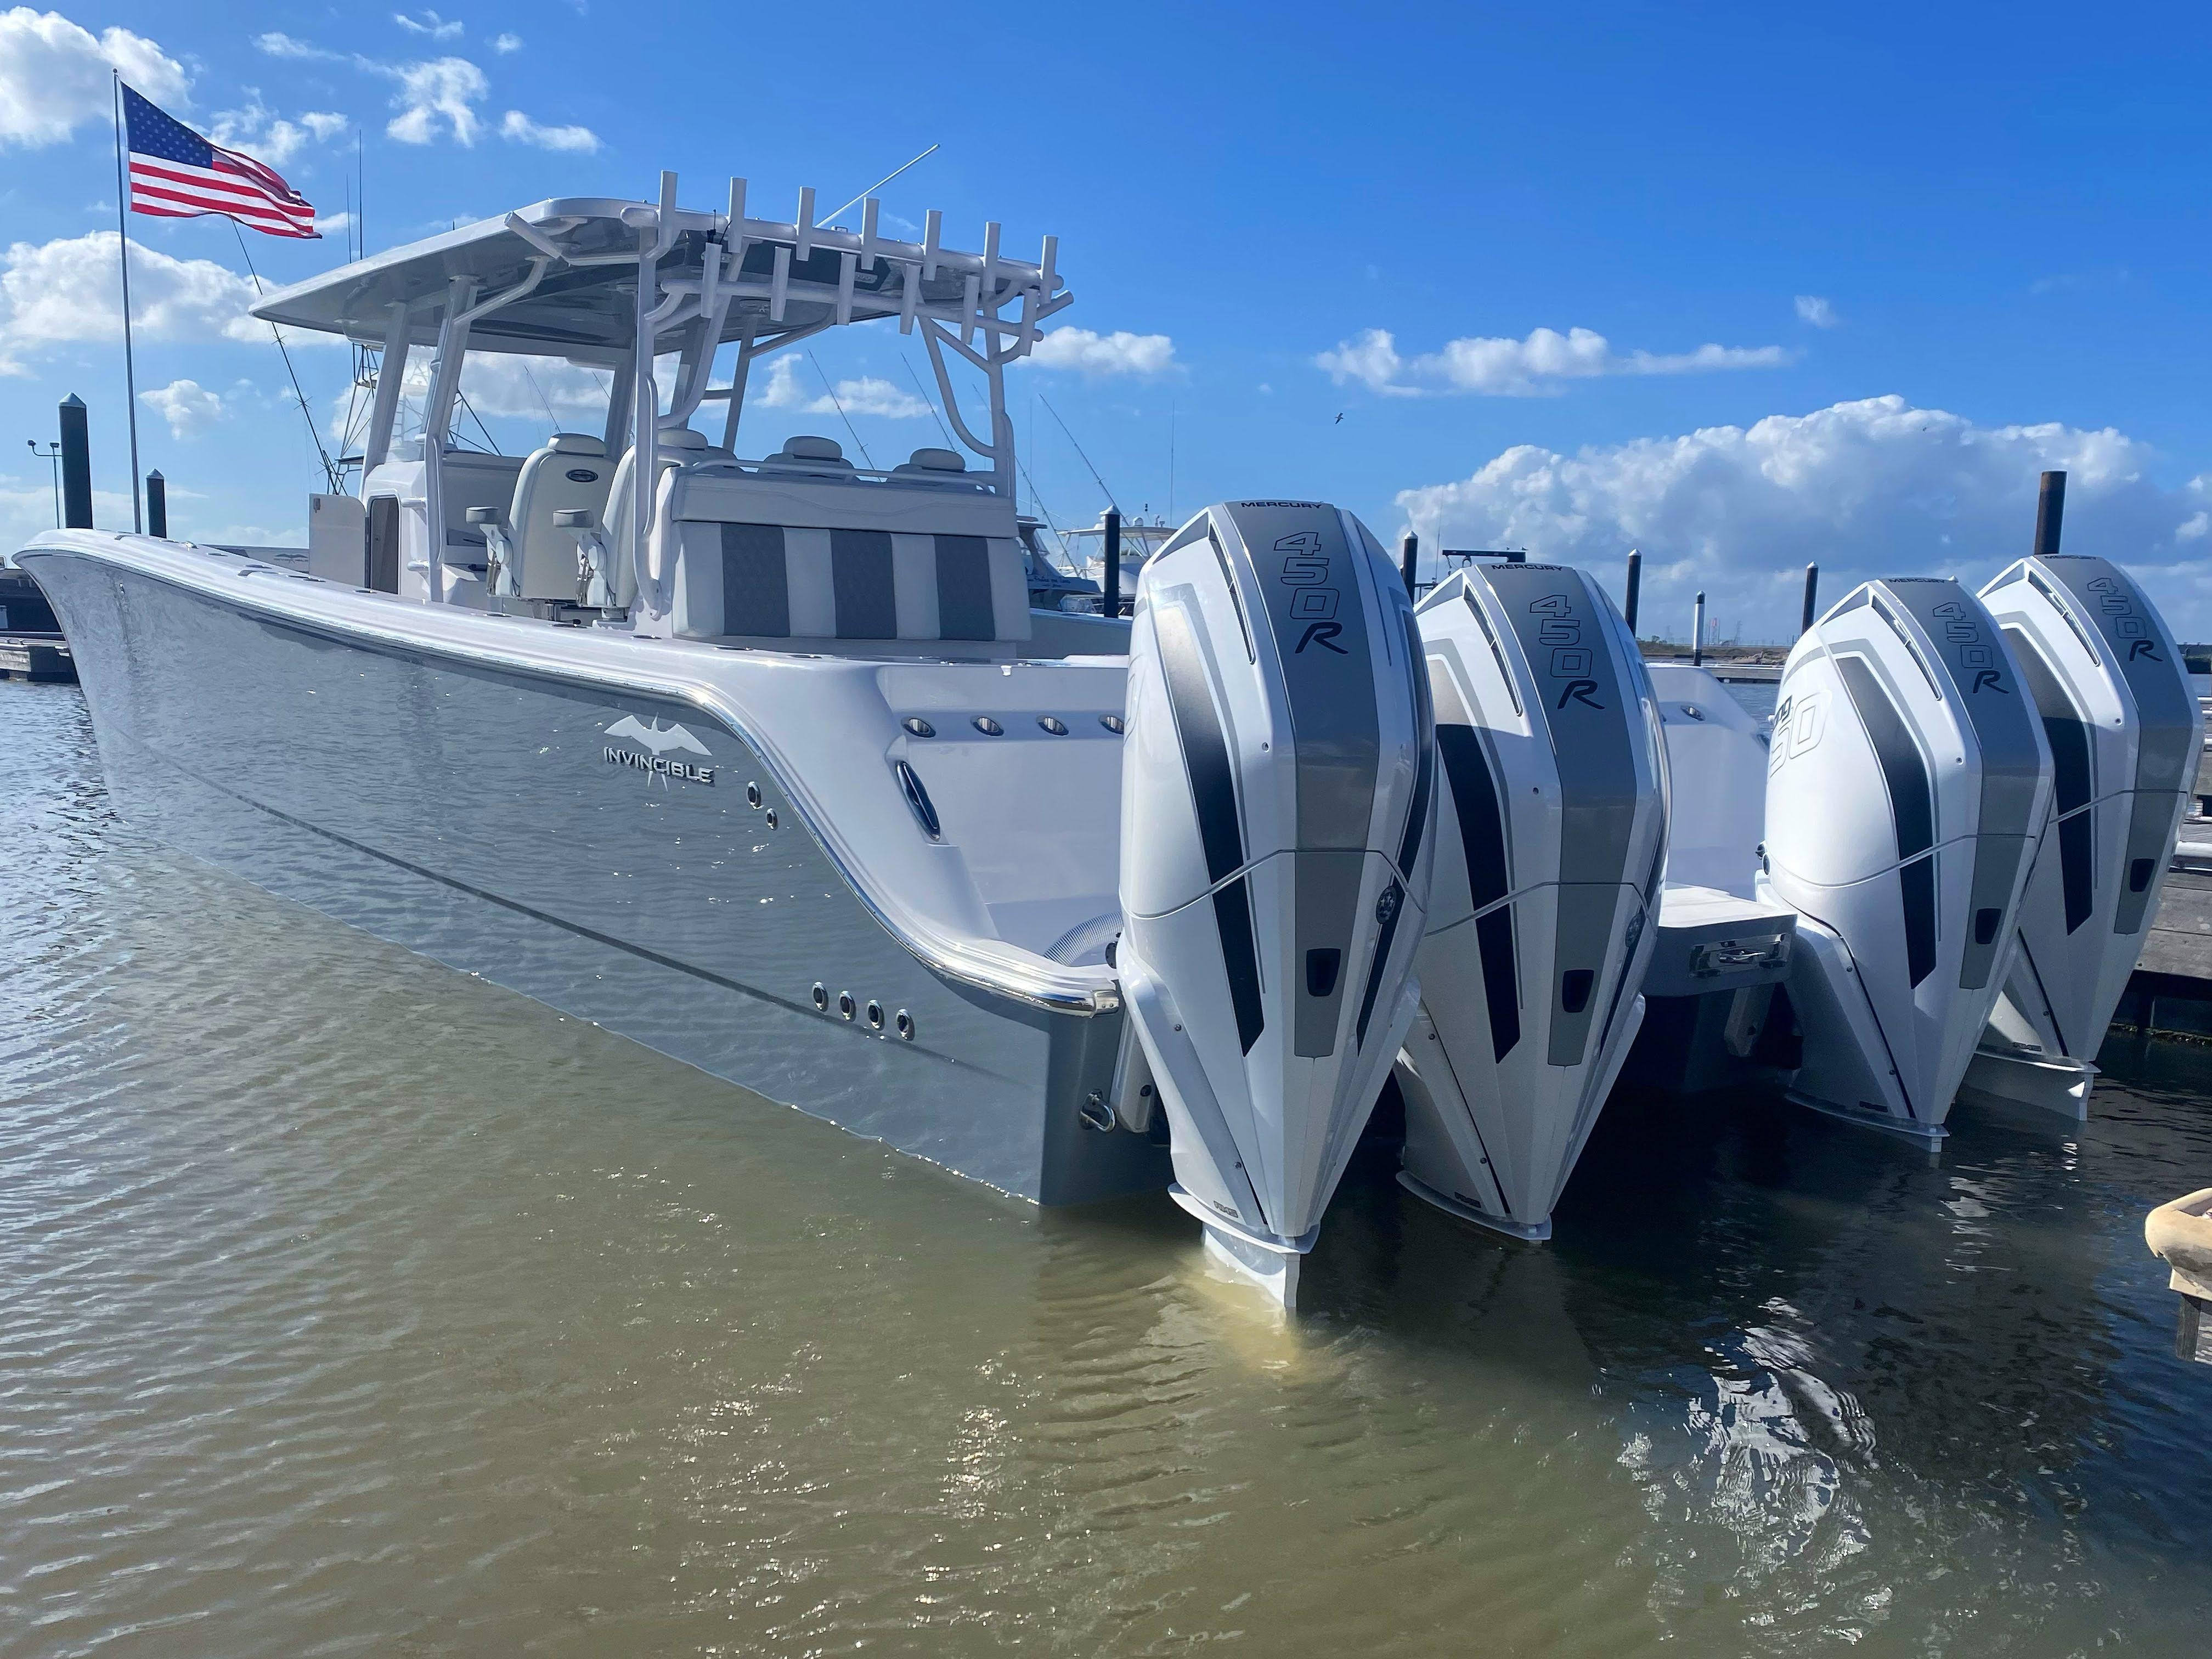 2022 Invincible 46 Catamaran Power Catamaran for sale - YachtWorld